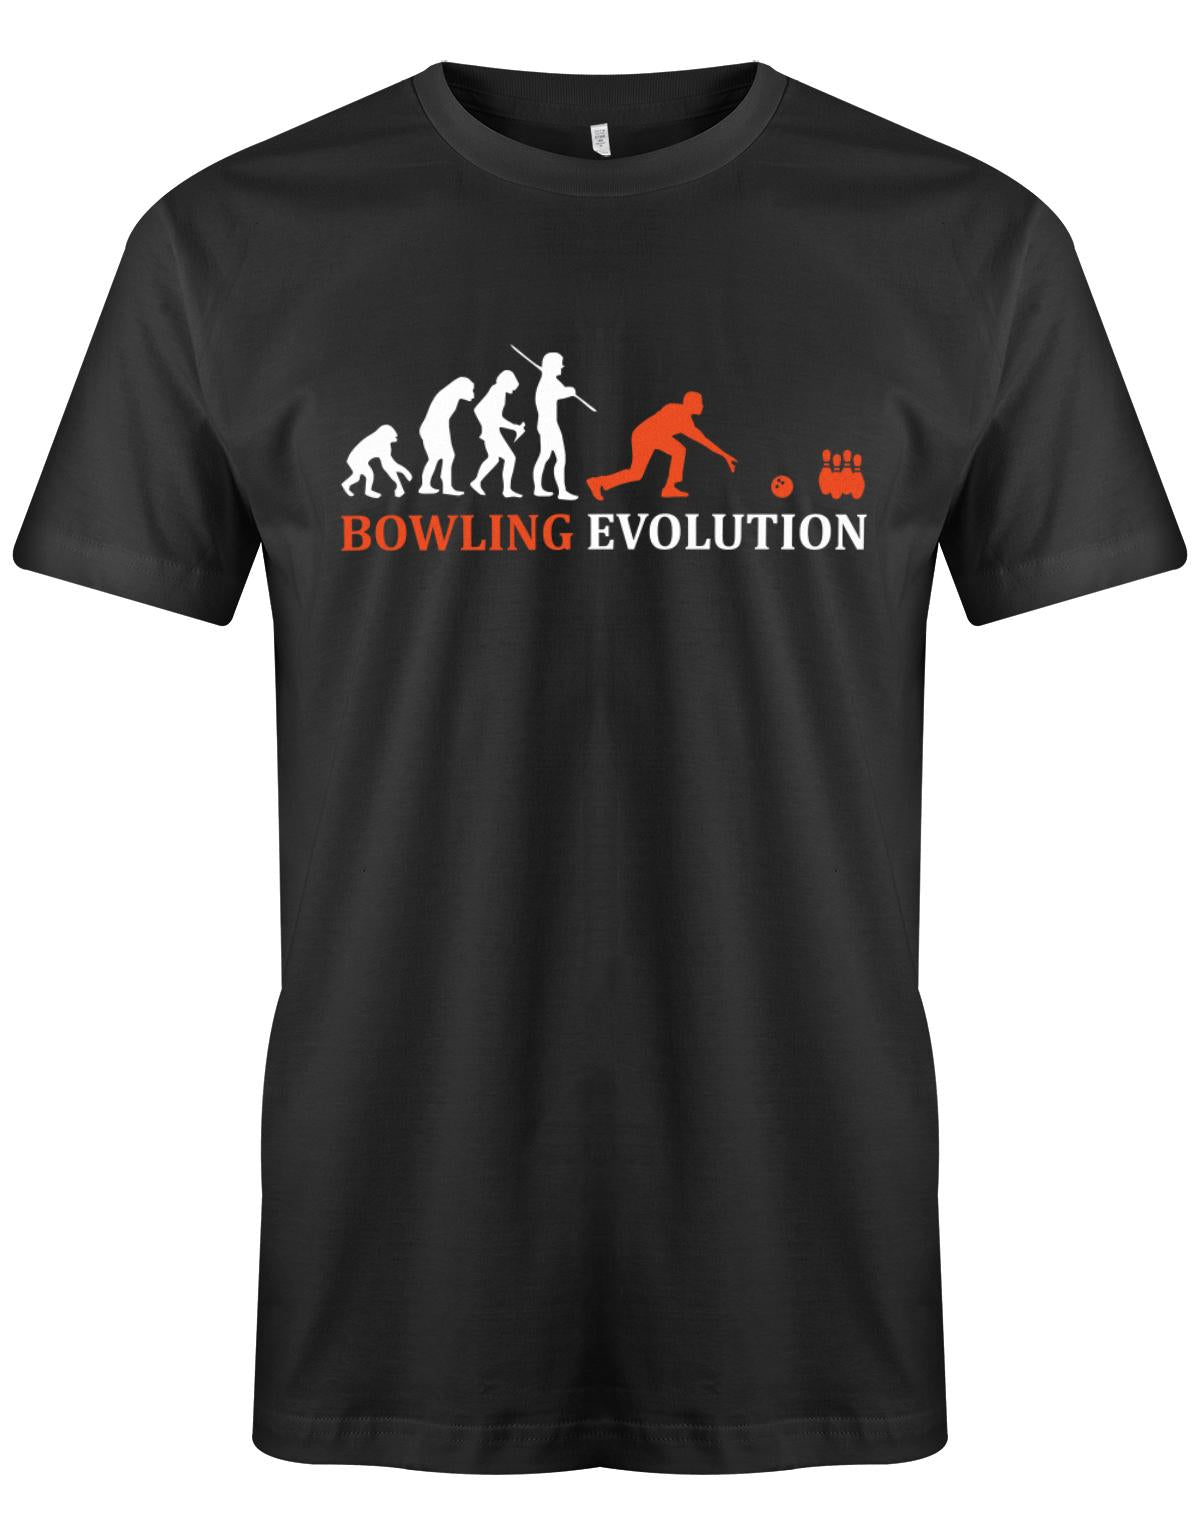 Bowling-Evolution-Bowler-Herren-Shirt-Schwarz